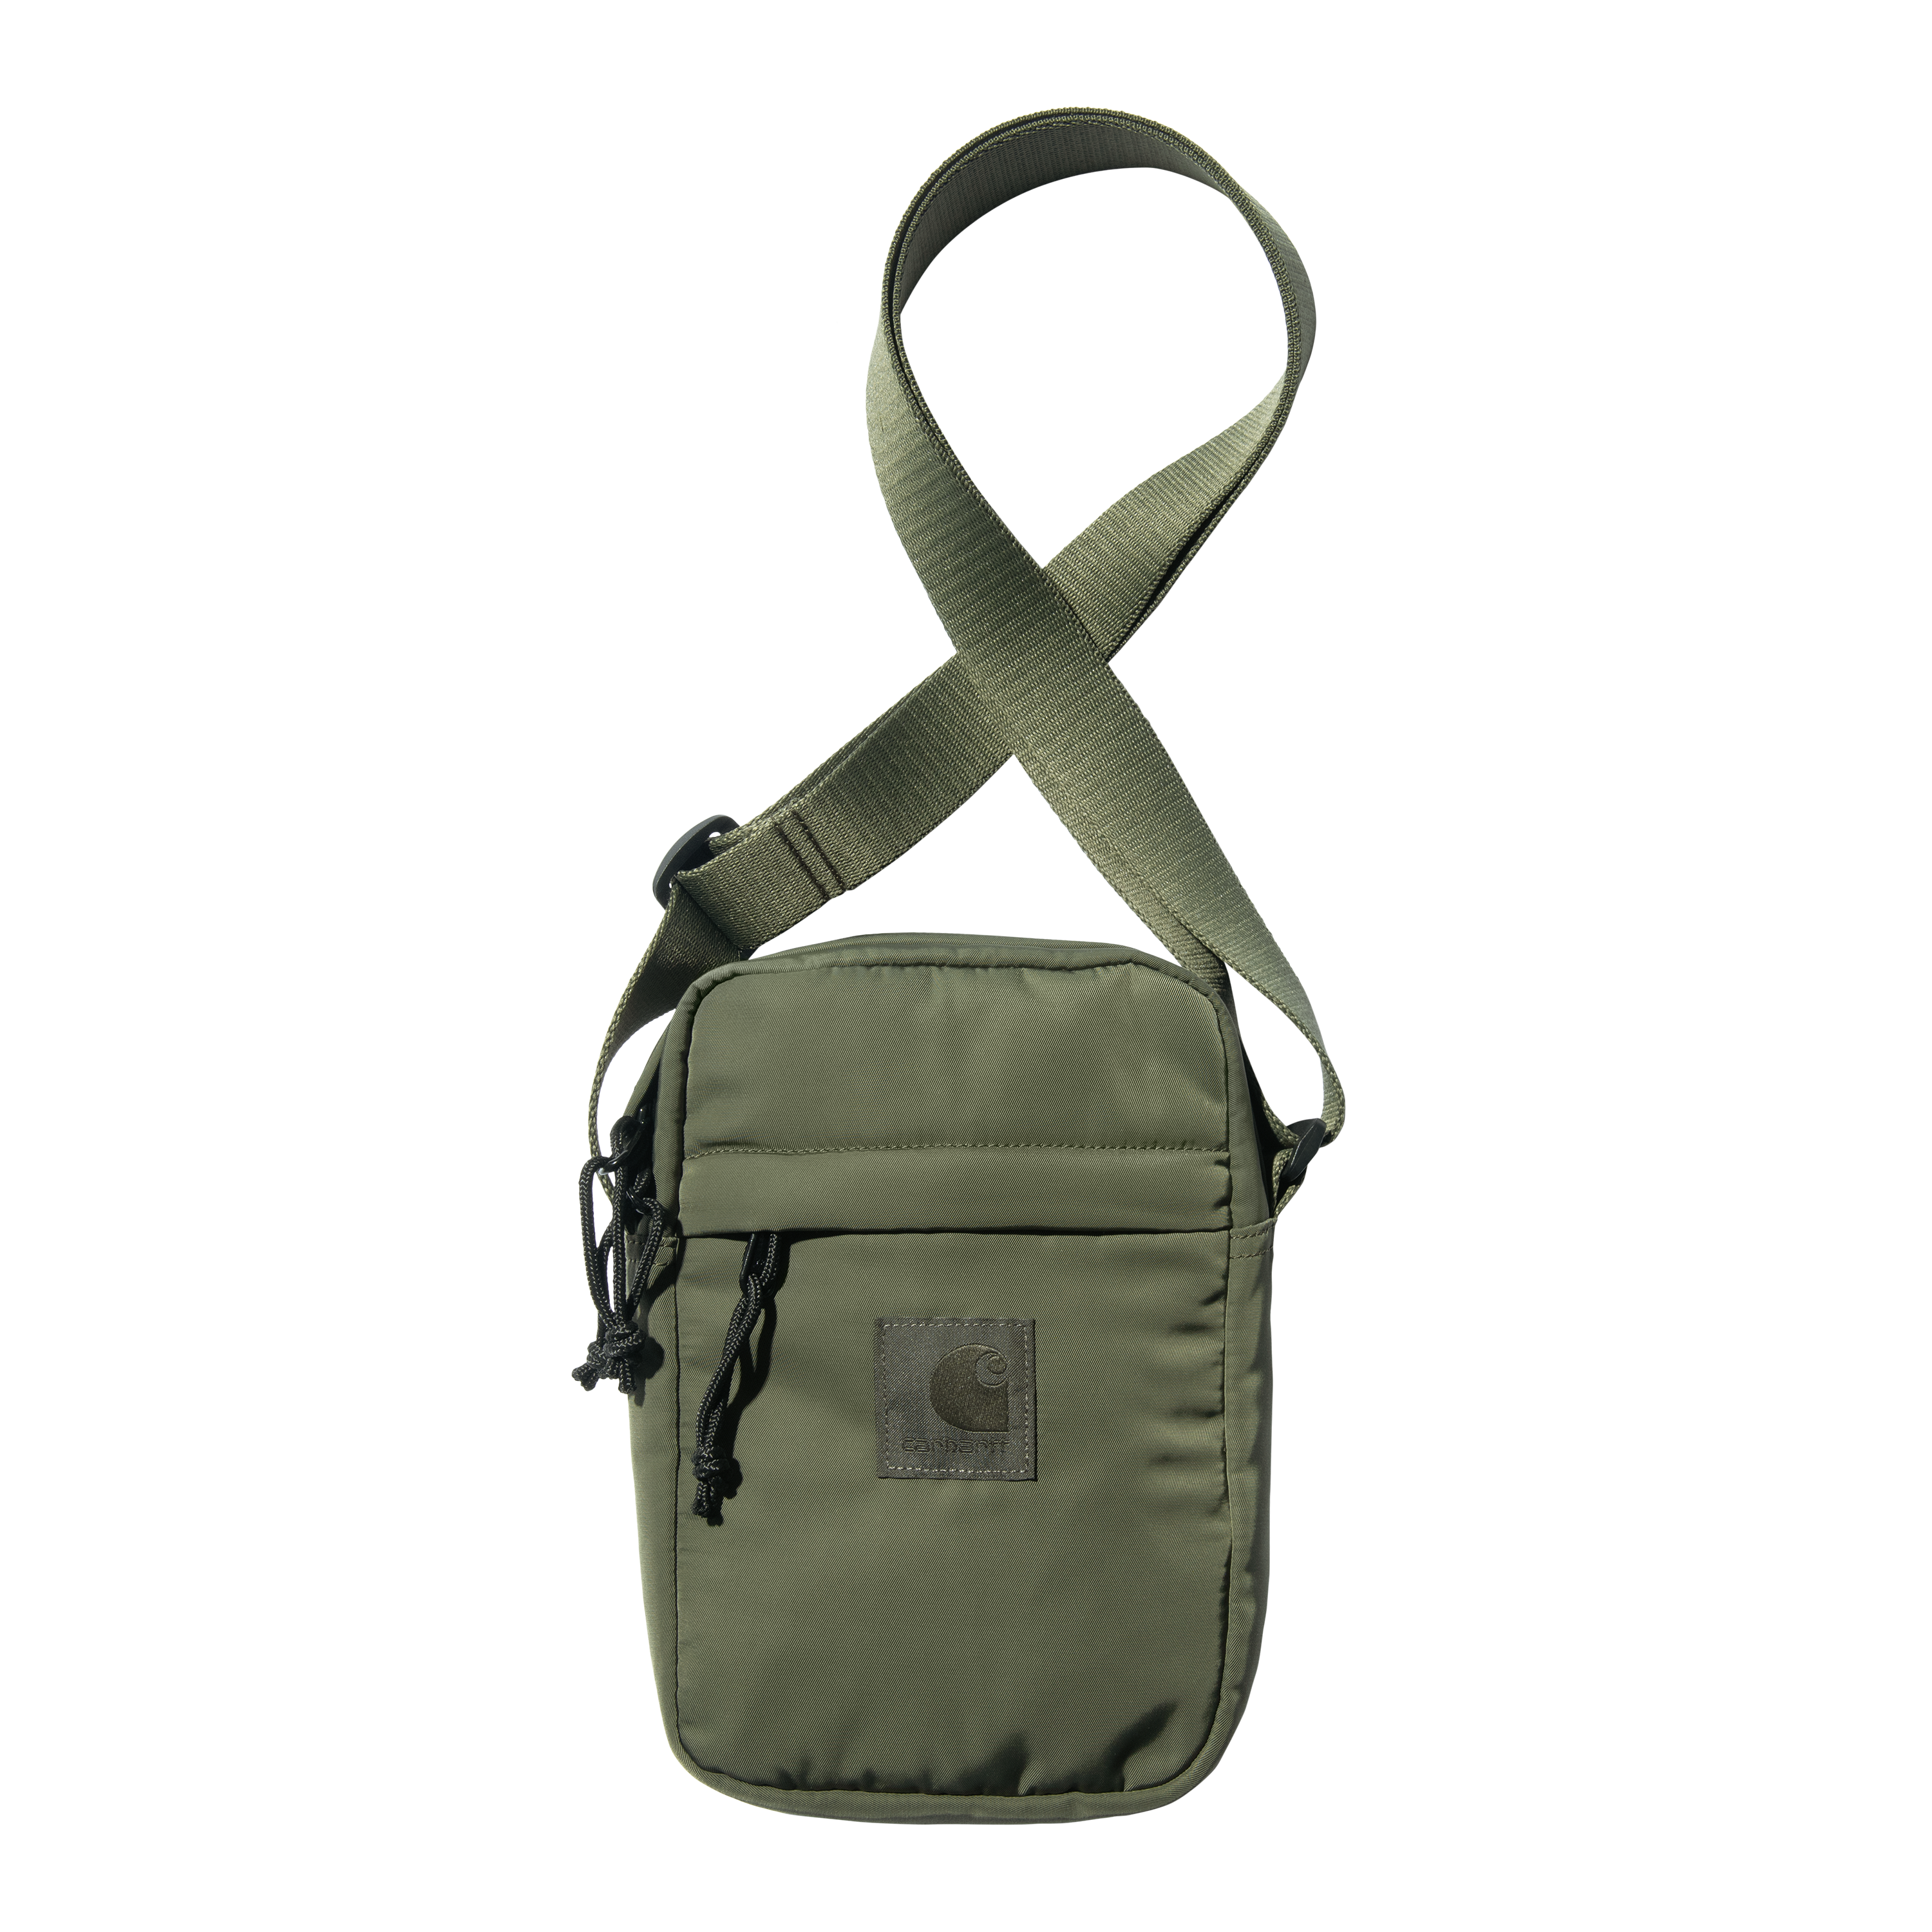 Carhartt Mono Sling Backpack, Unisex Crossbody Bag for Travel One Size, Grey